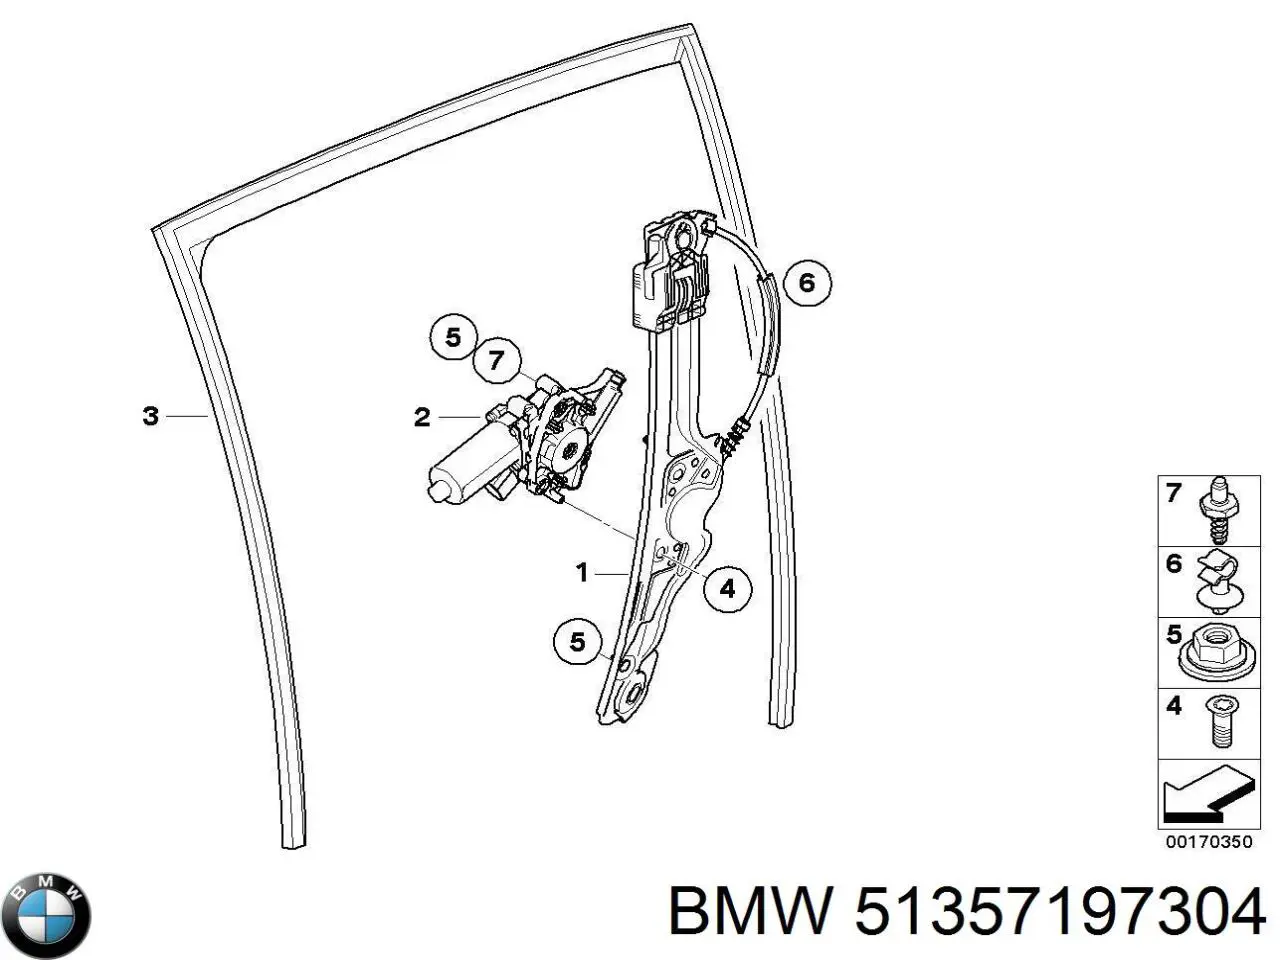 Mecanismo alzacristales, puerta trasera derecha para BMW X6 (E71)